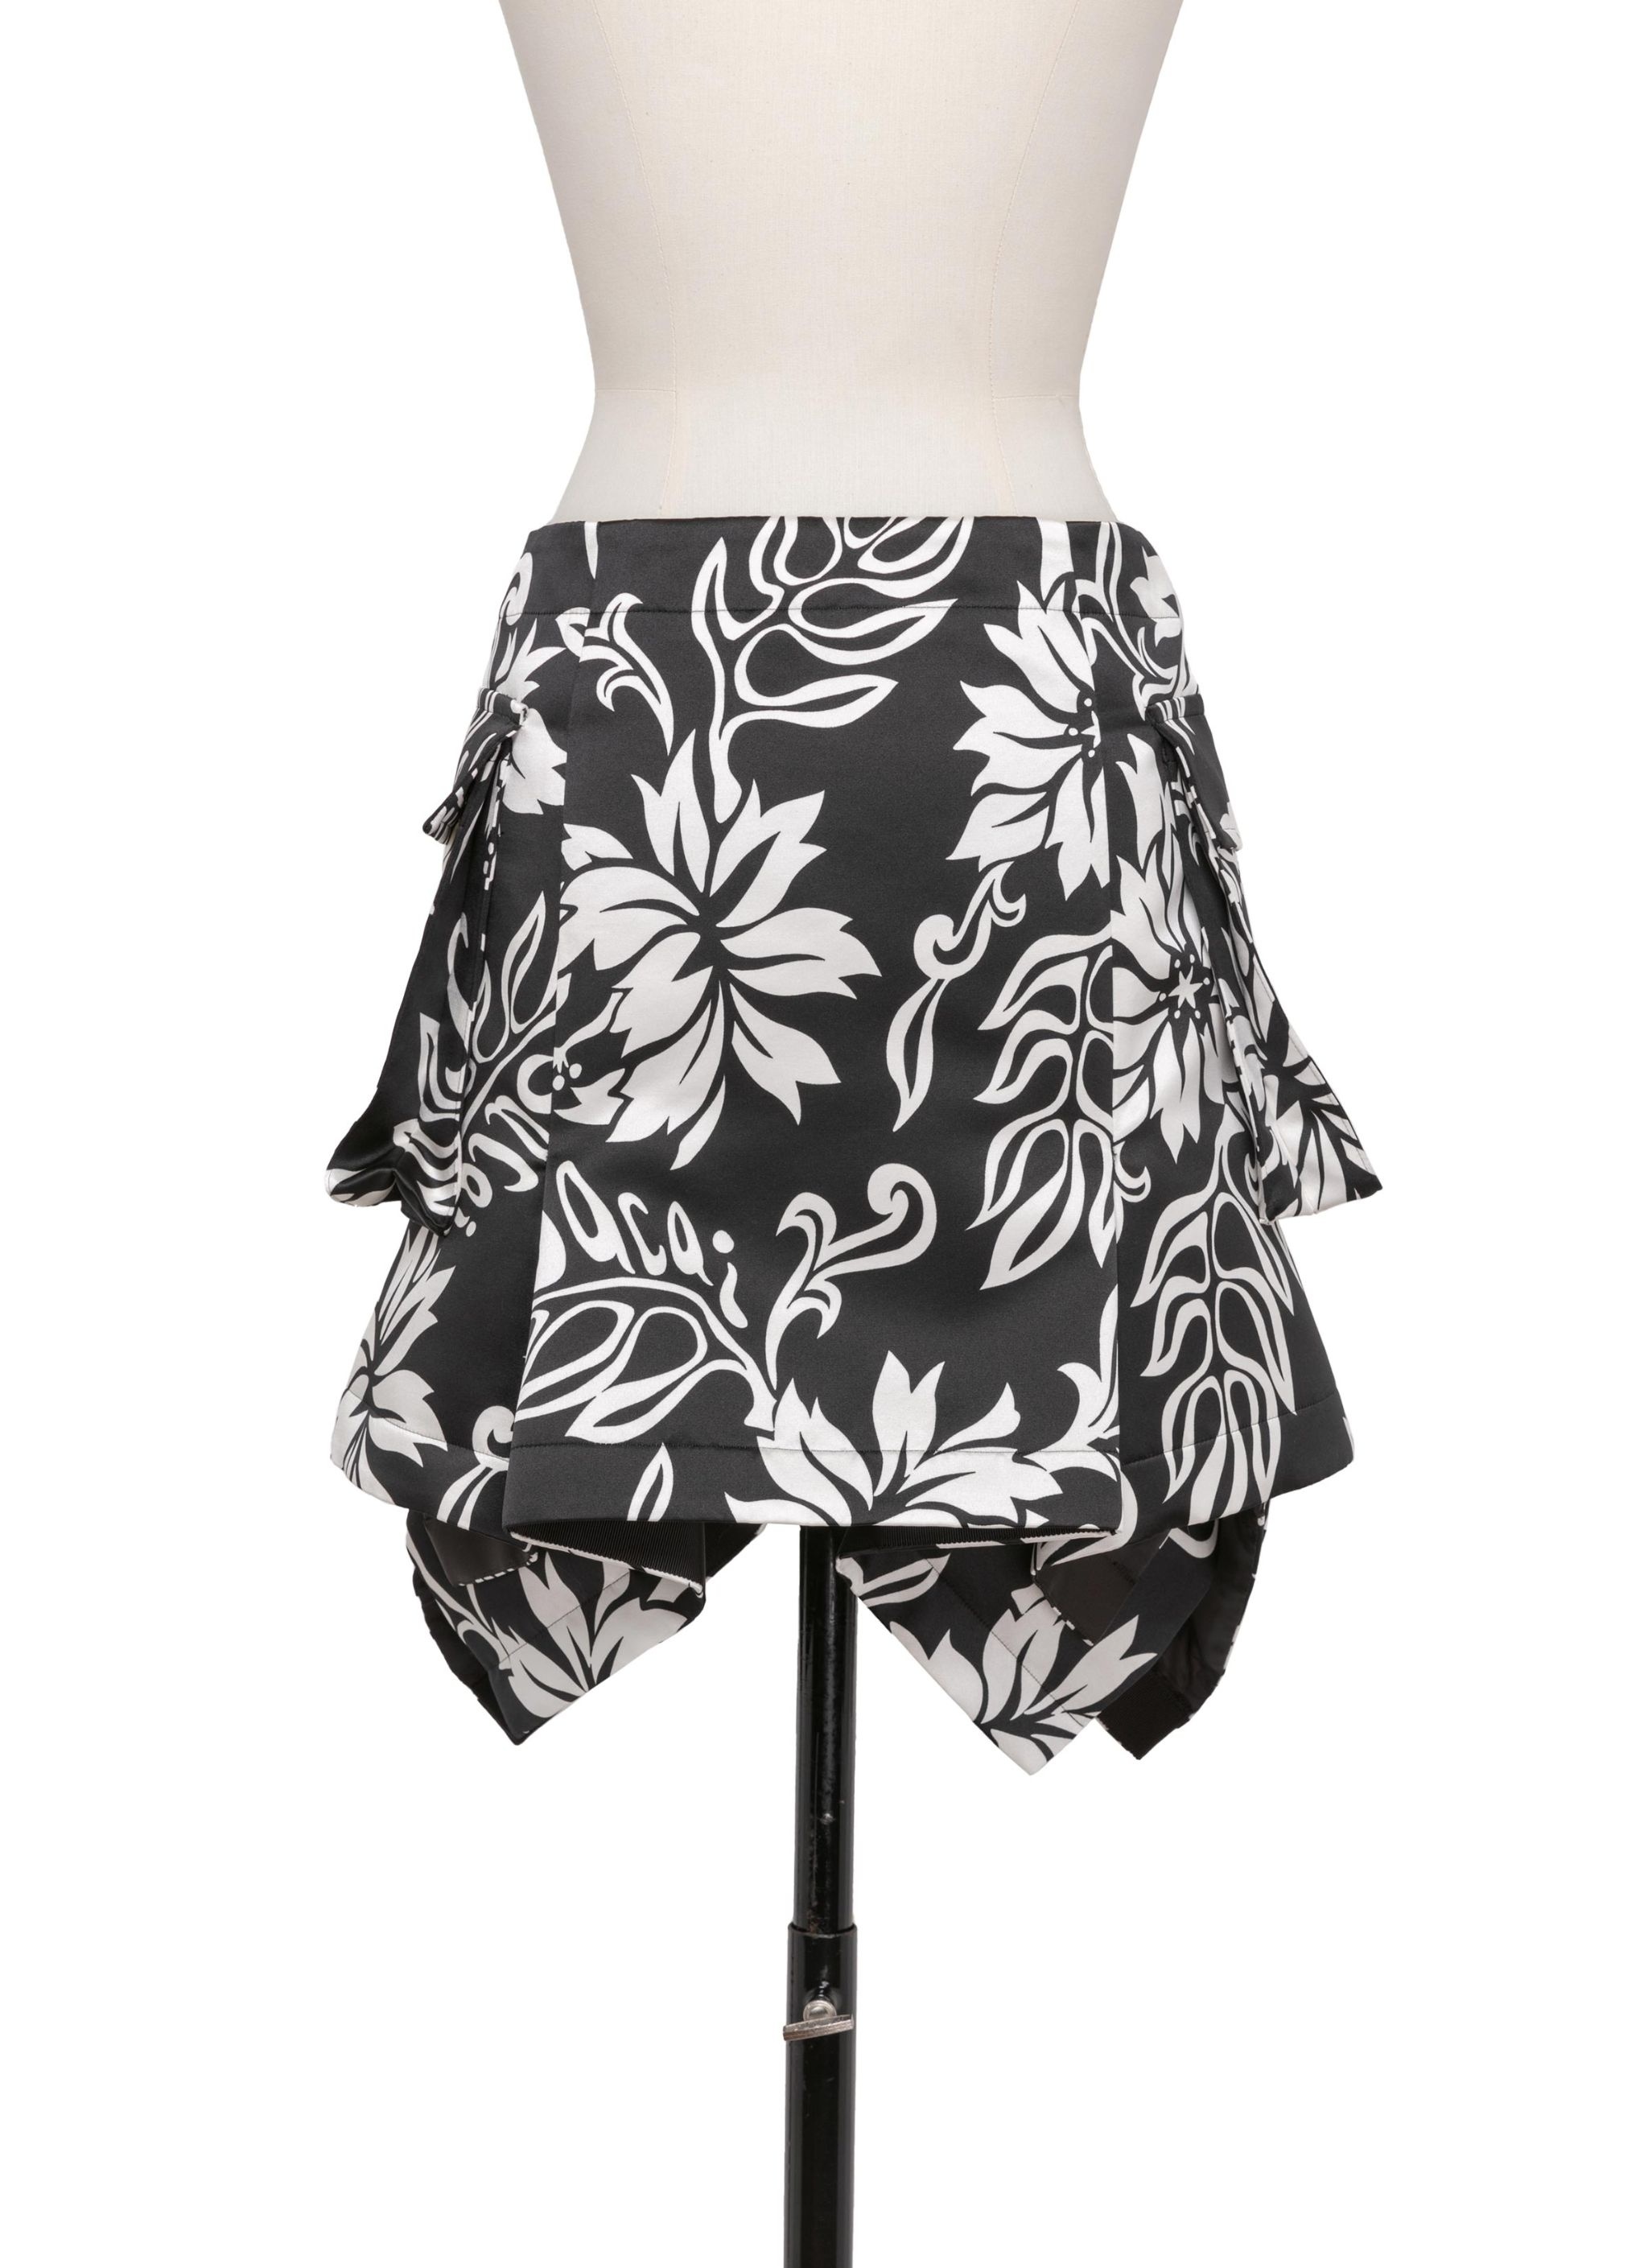 Floral Print Skirt - 3